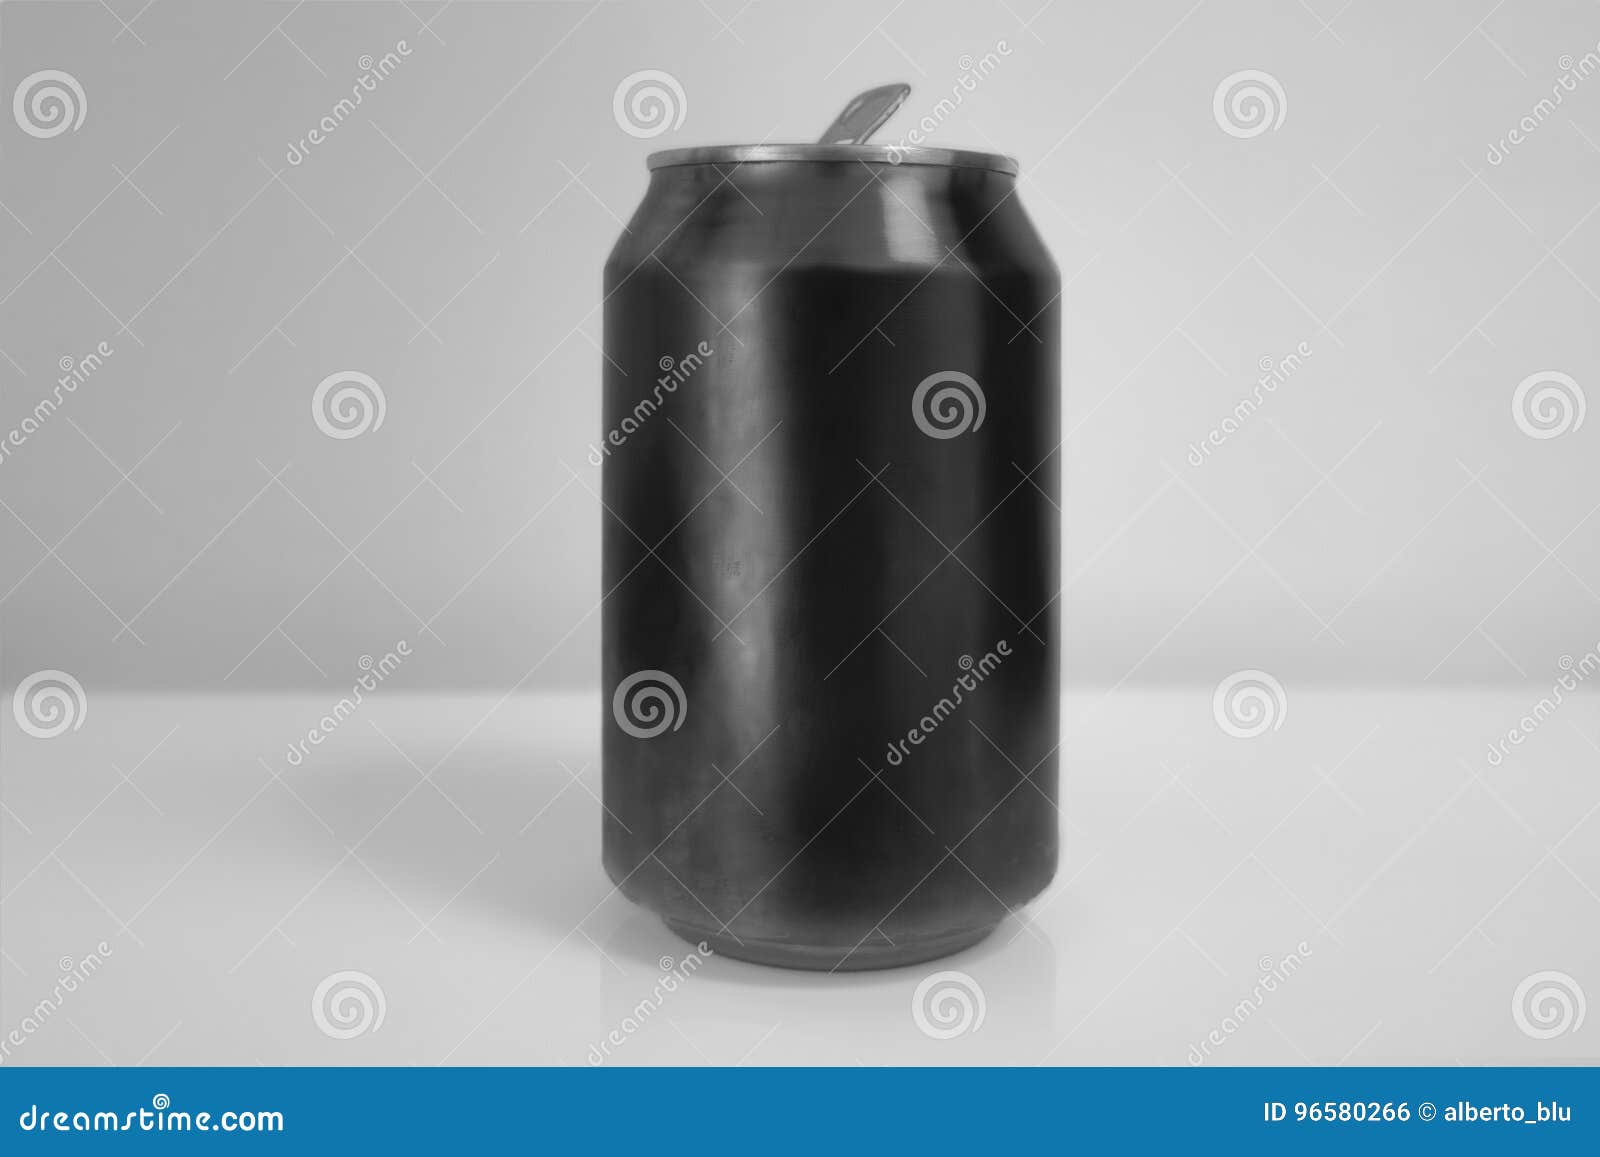 aluminum black soda can over white background